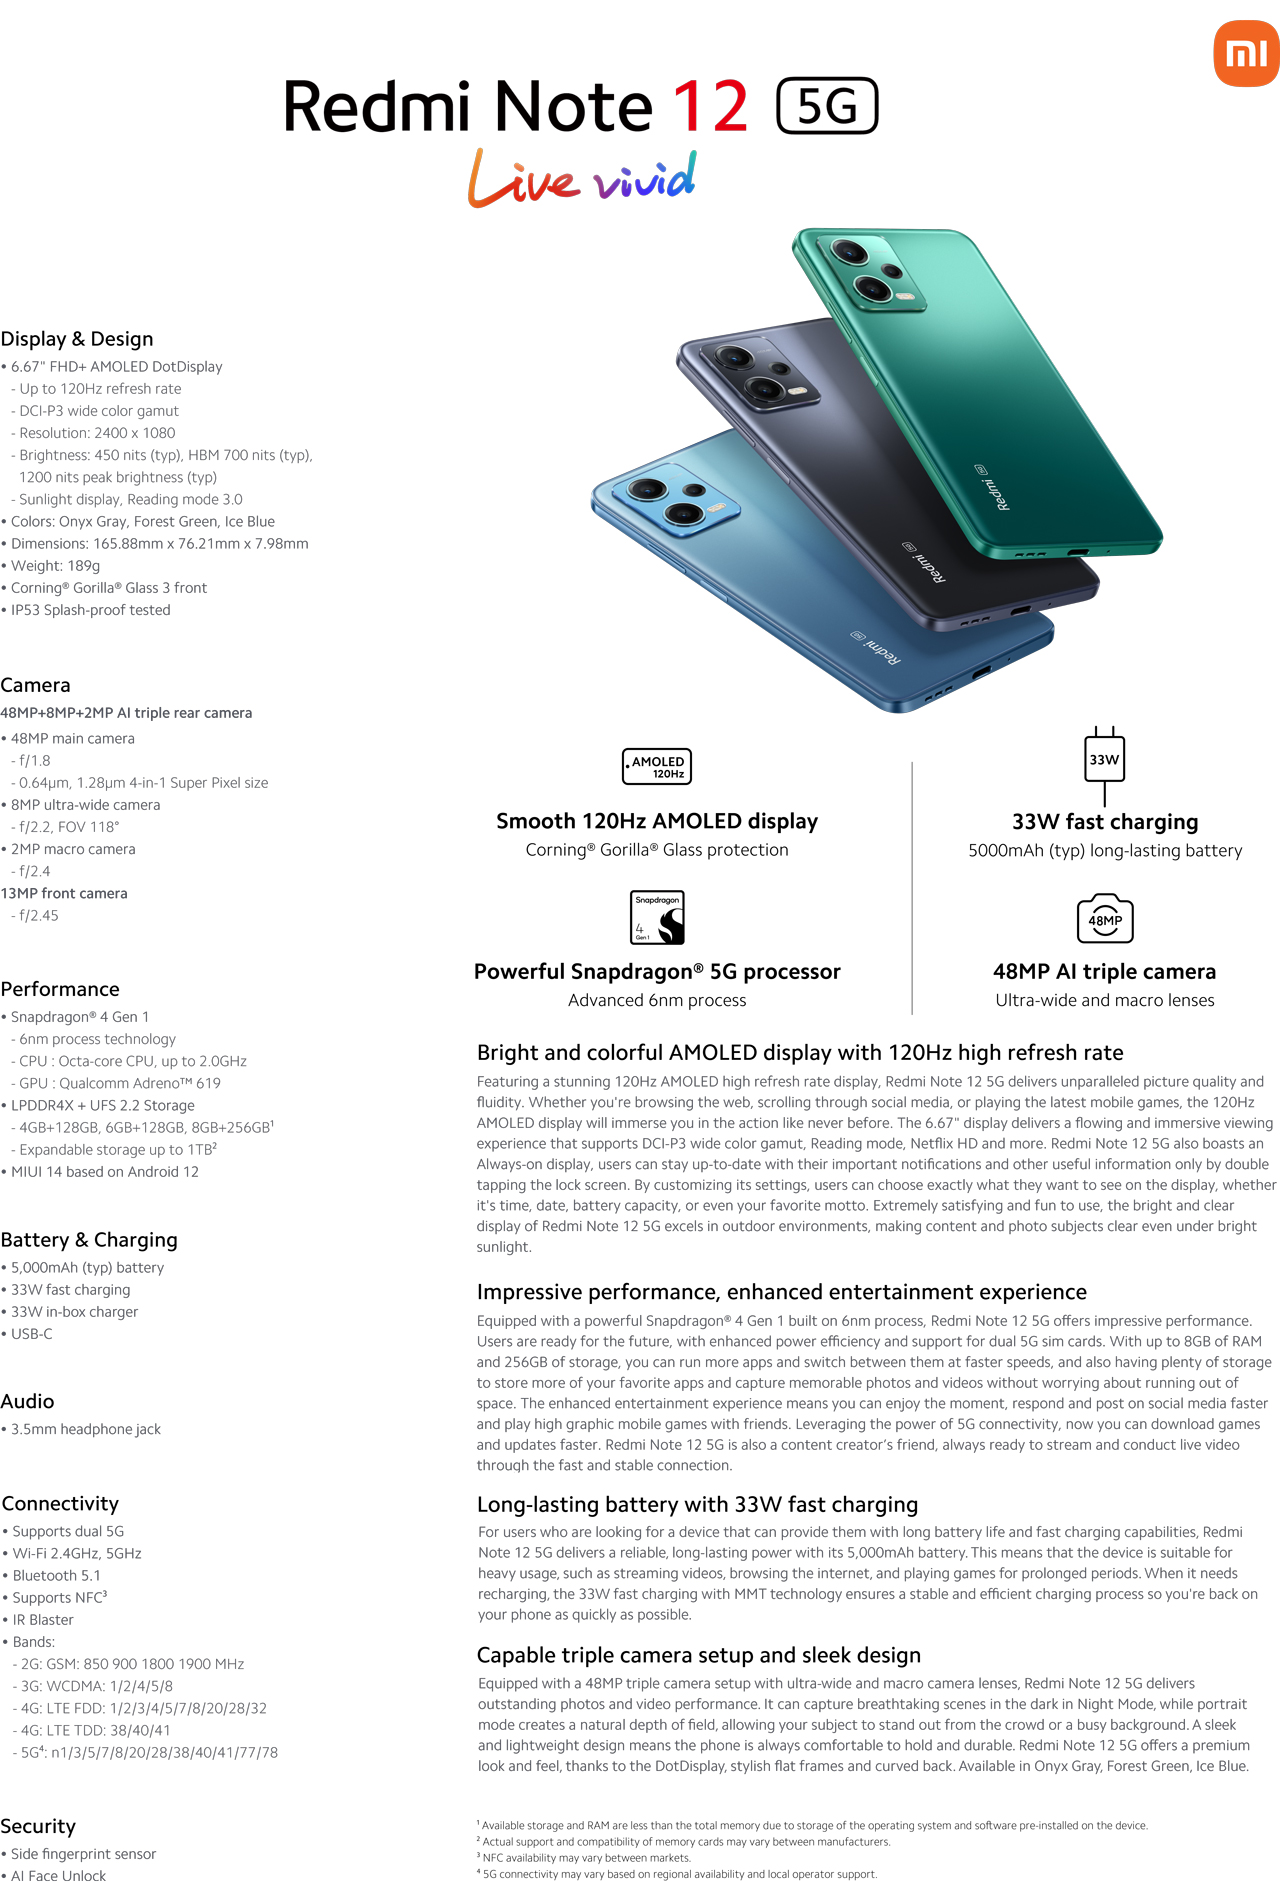 Xiaomi Redmi Note 12 Pro 4G - Specs